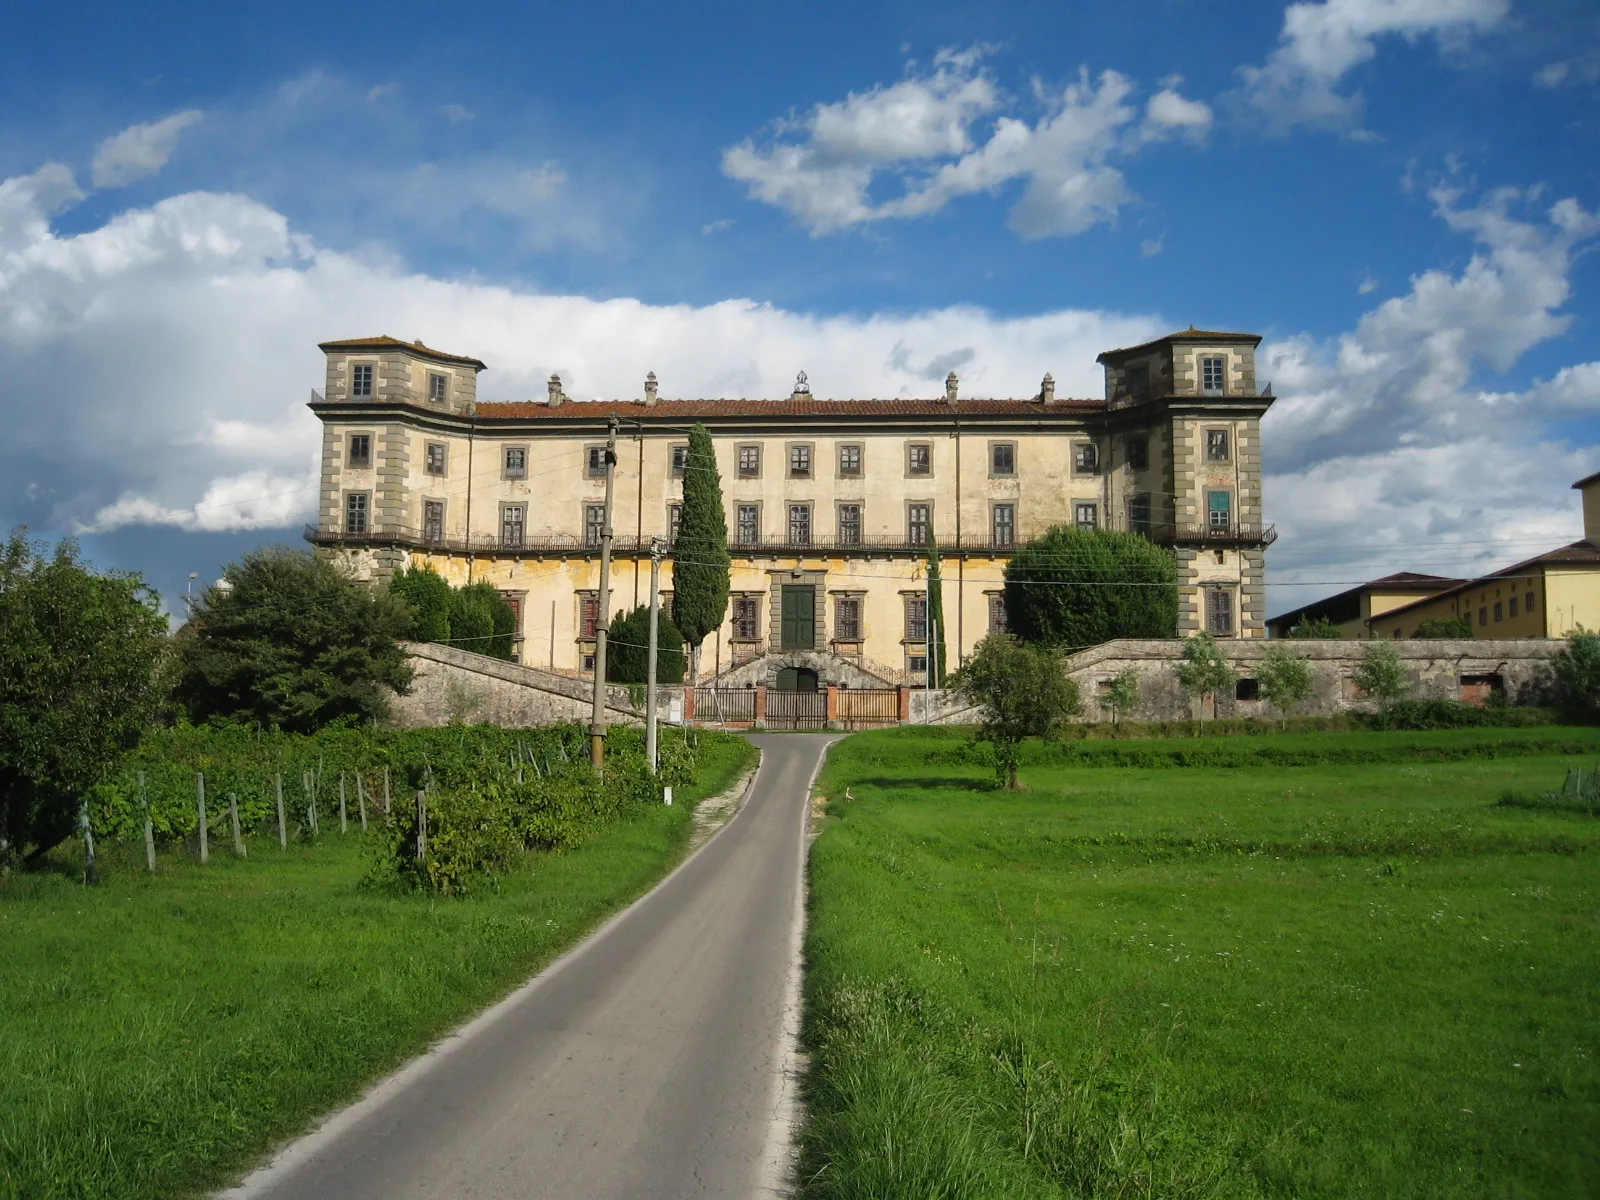 Image of Toscana